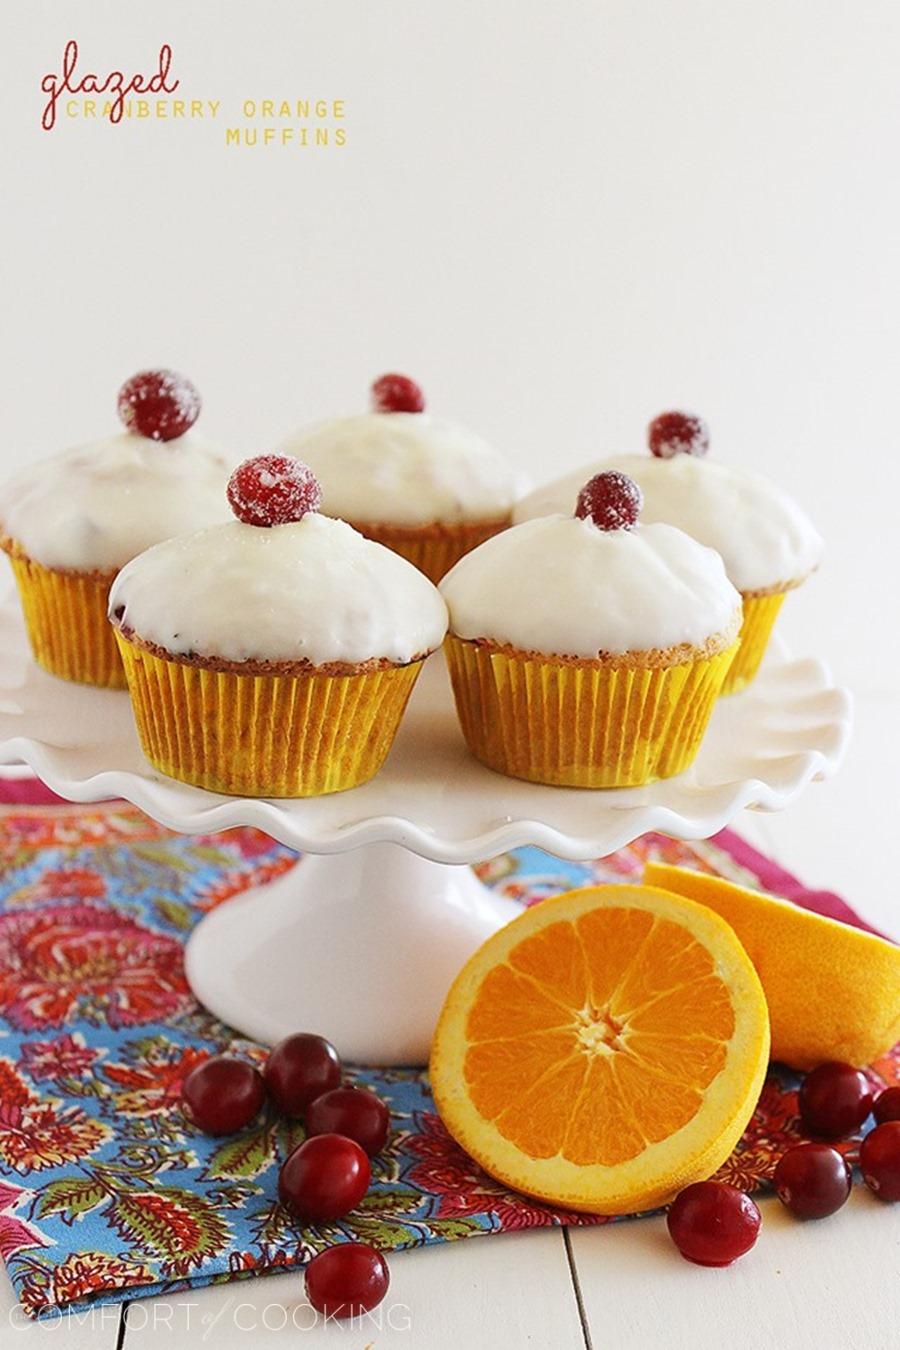 Glazed Cranberry Orange Muffins